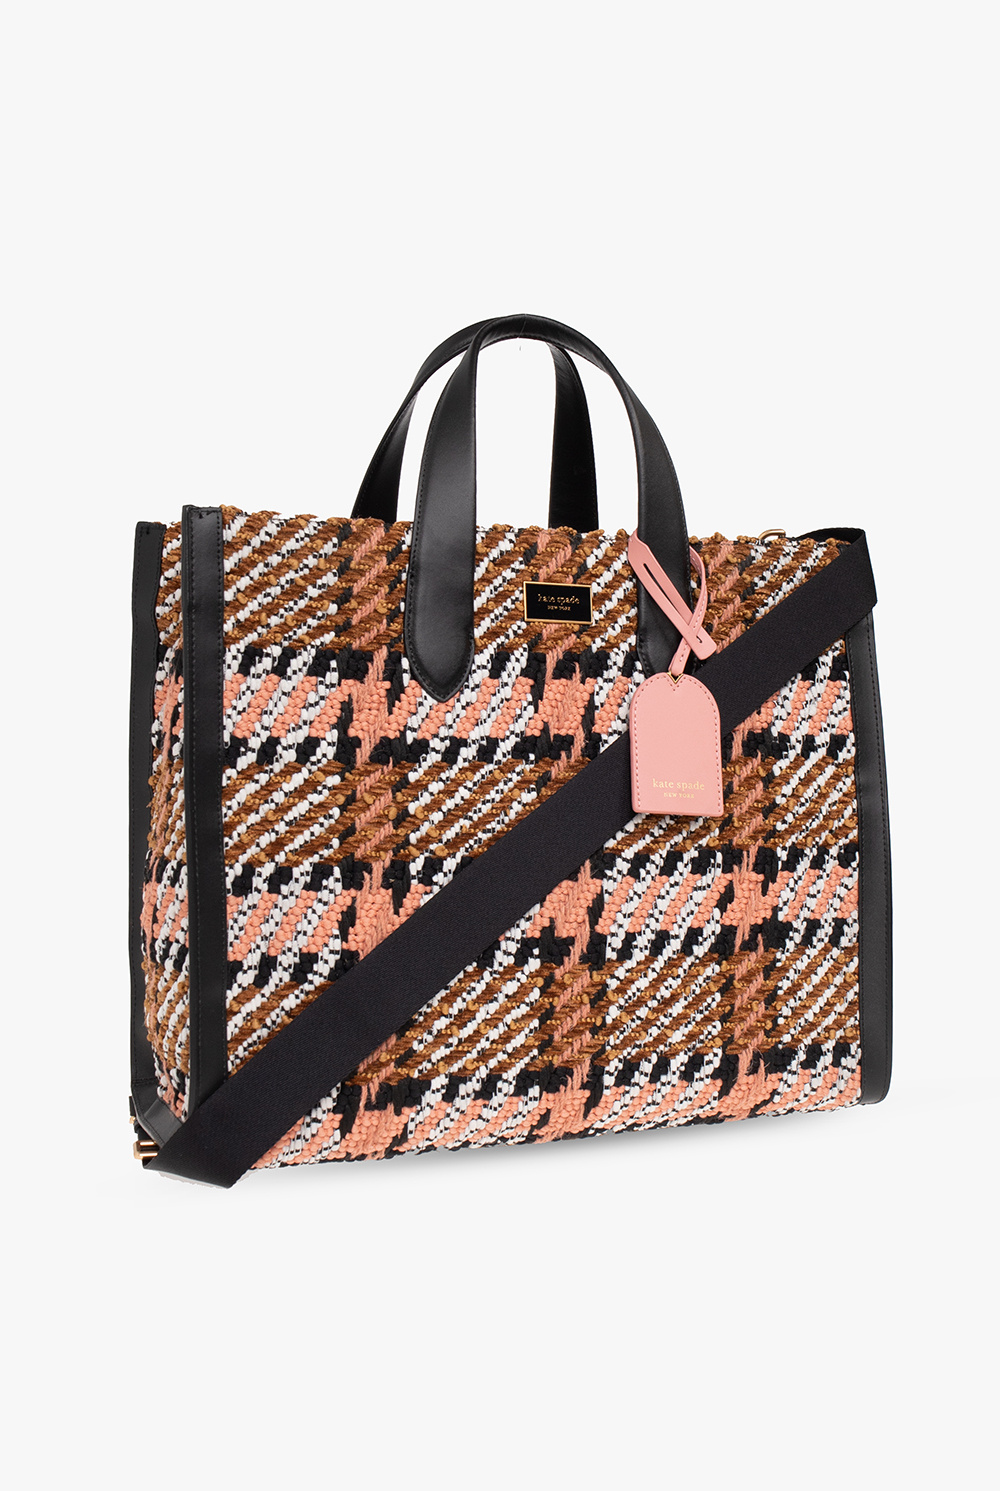 Kate Spade ‘Manhattan Large’ shopper bag